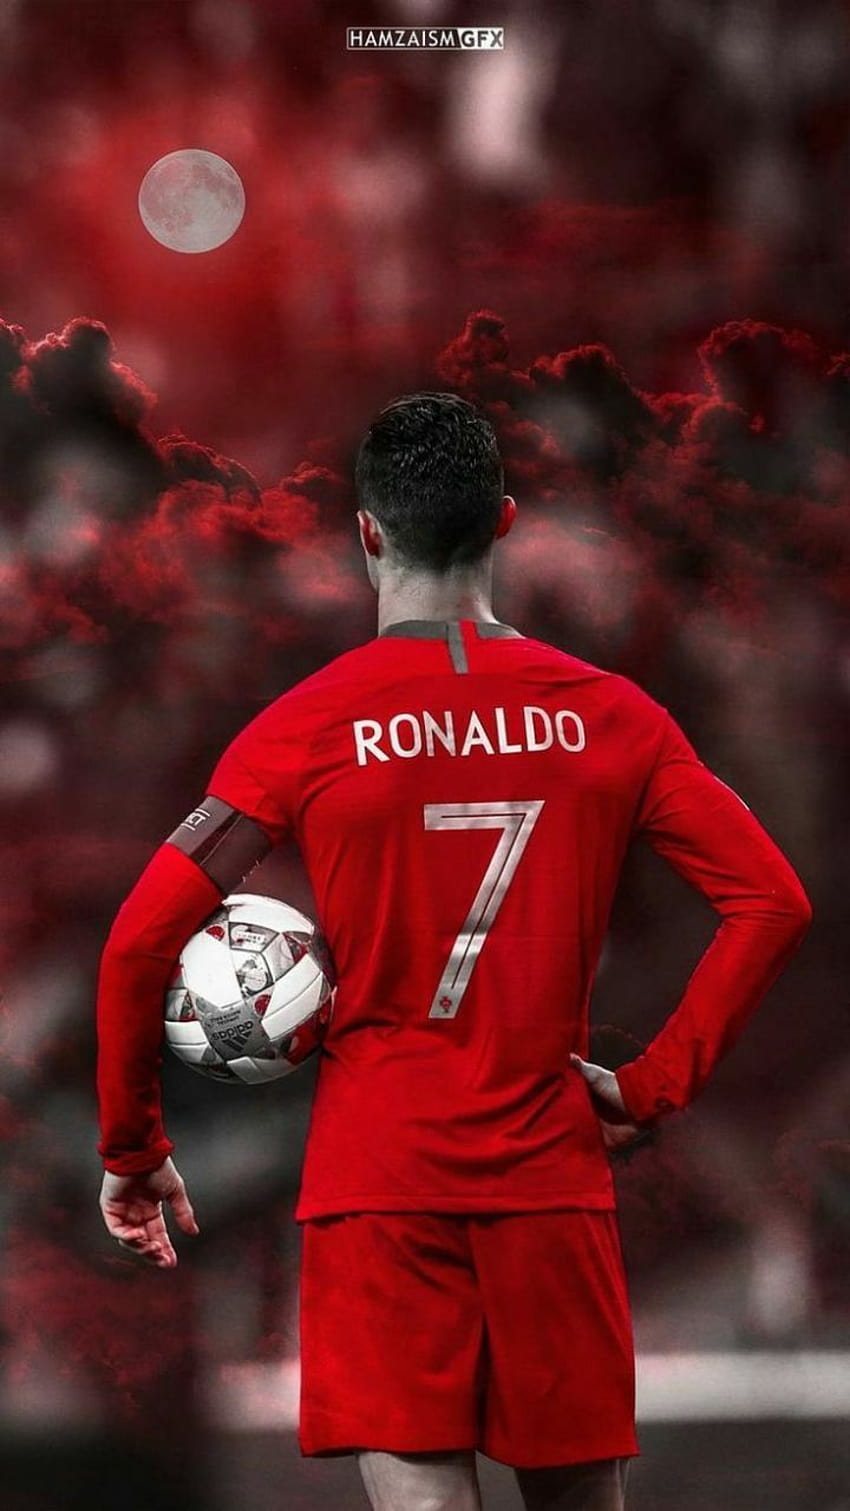 Cristiano Ronaldo Manchester United Wallpaper | Fotografia de futebol,  Futebol divertido, Fotos de futebol